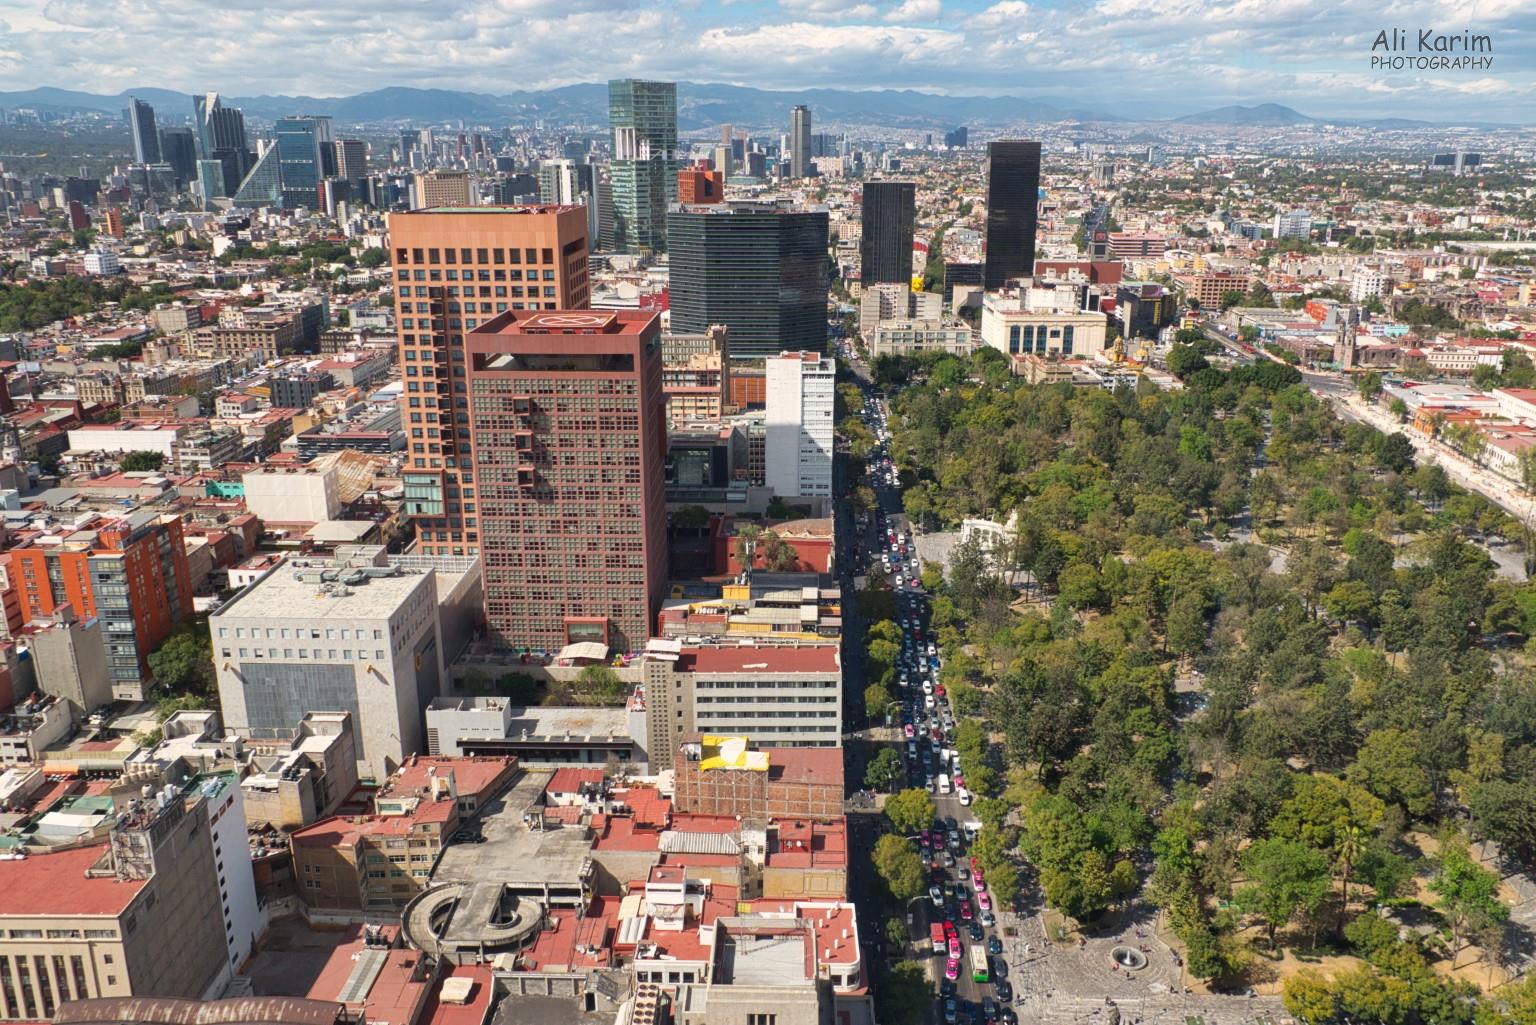 Mexico City, Mexico, Dec 2019, It’s not all concrete